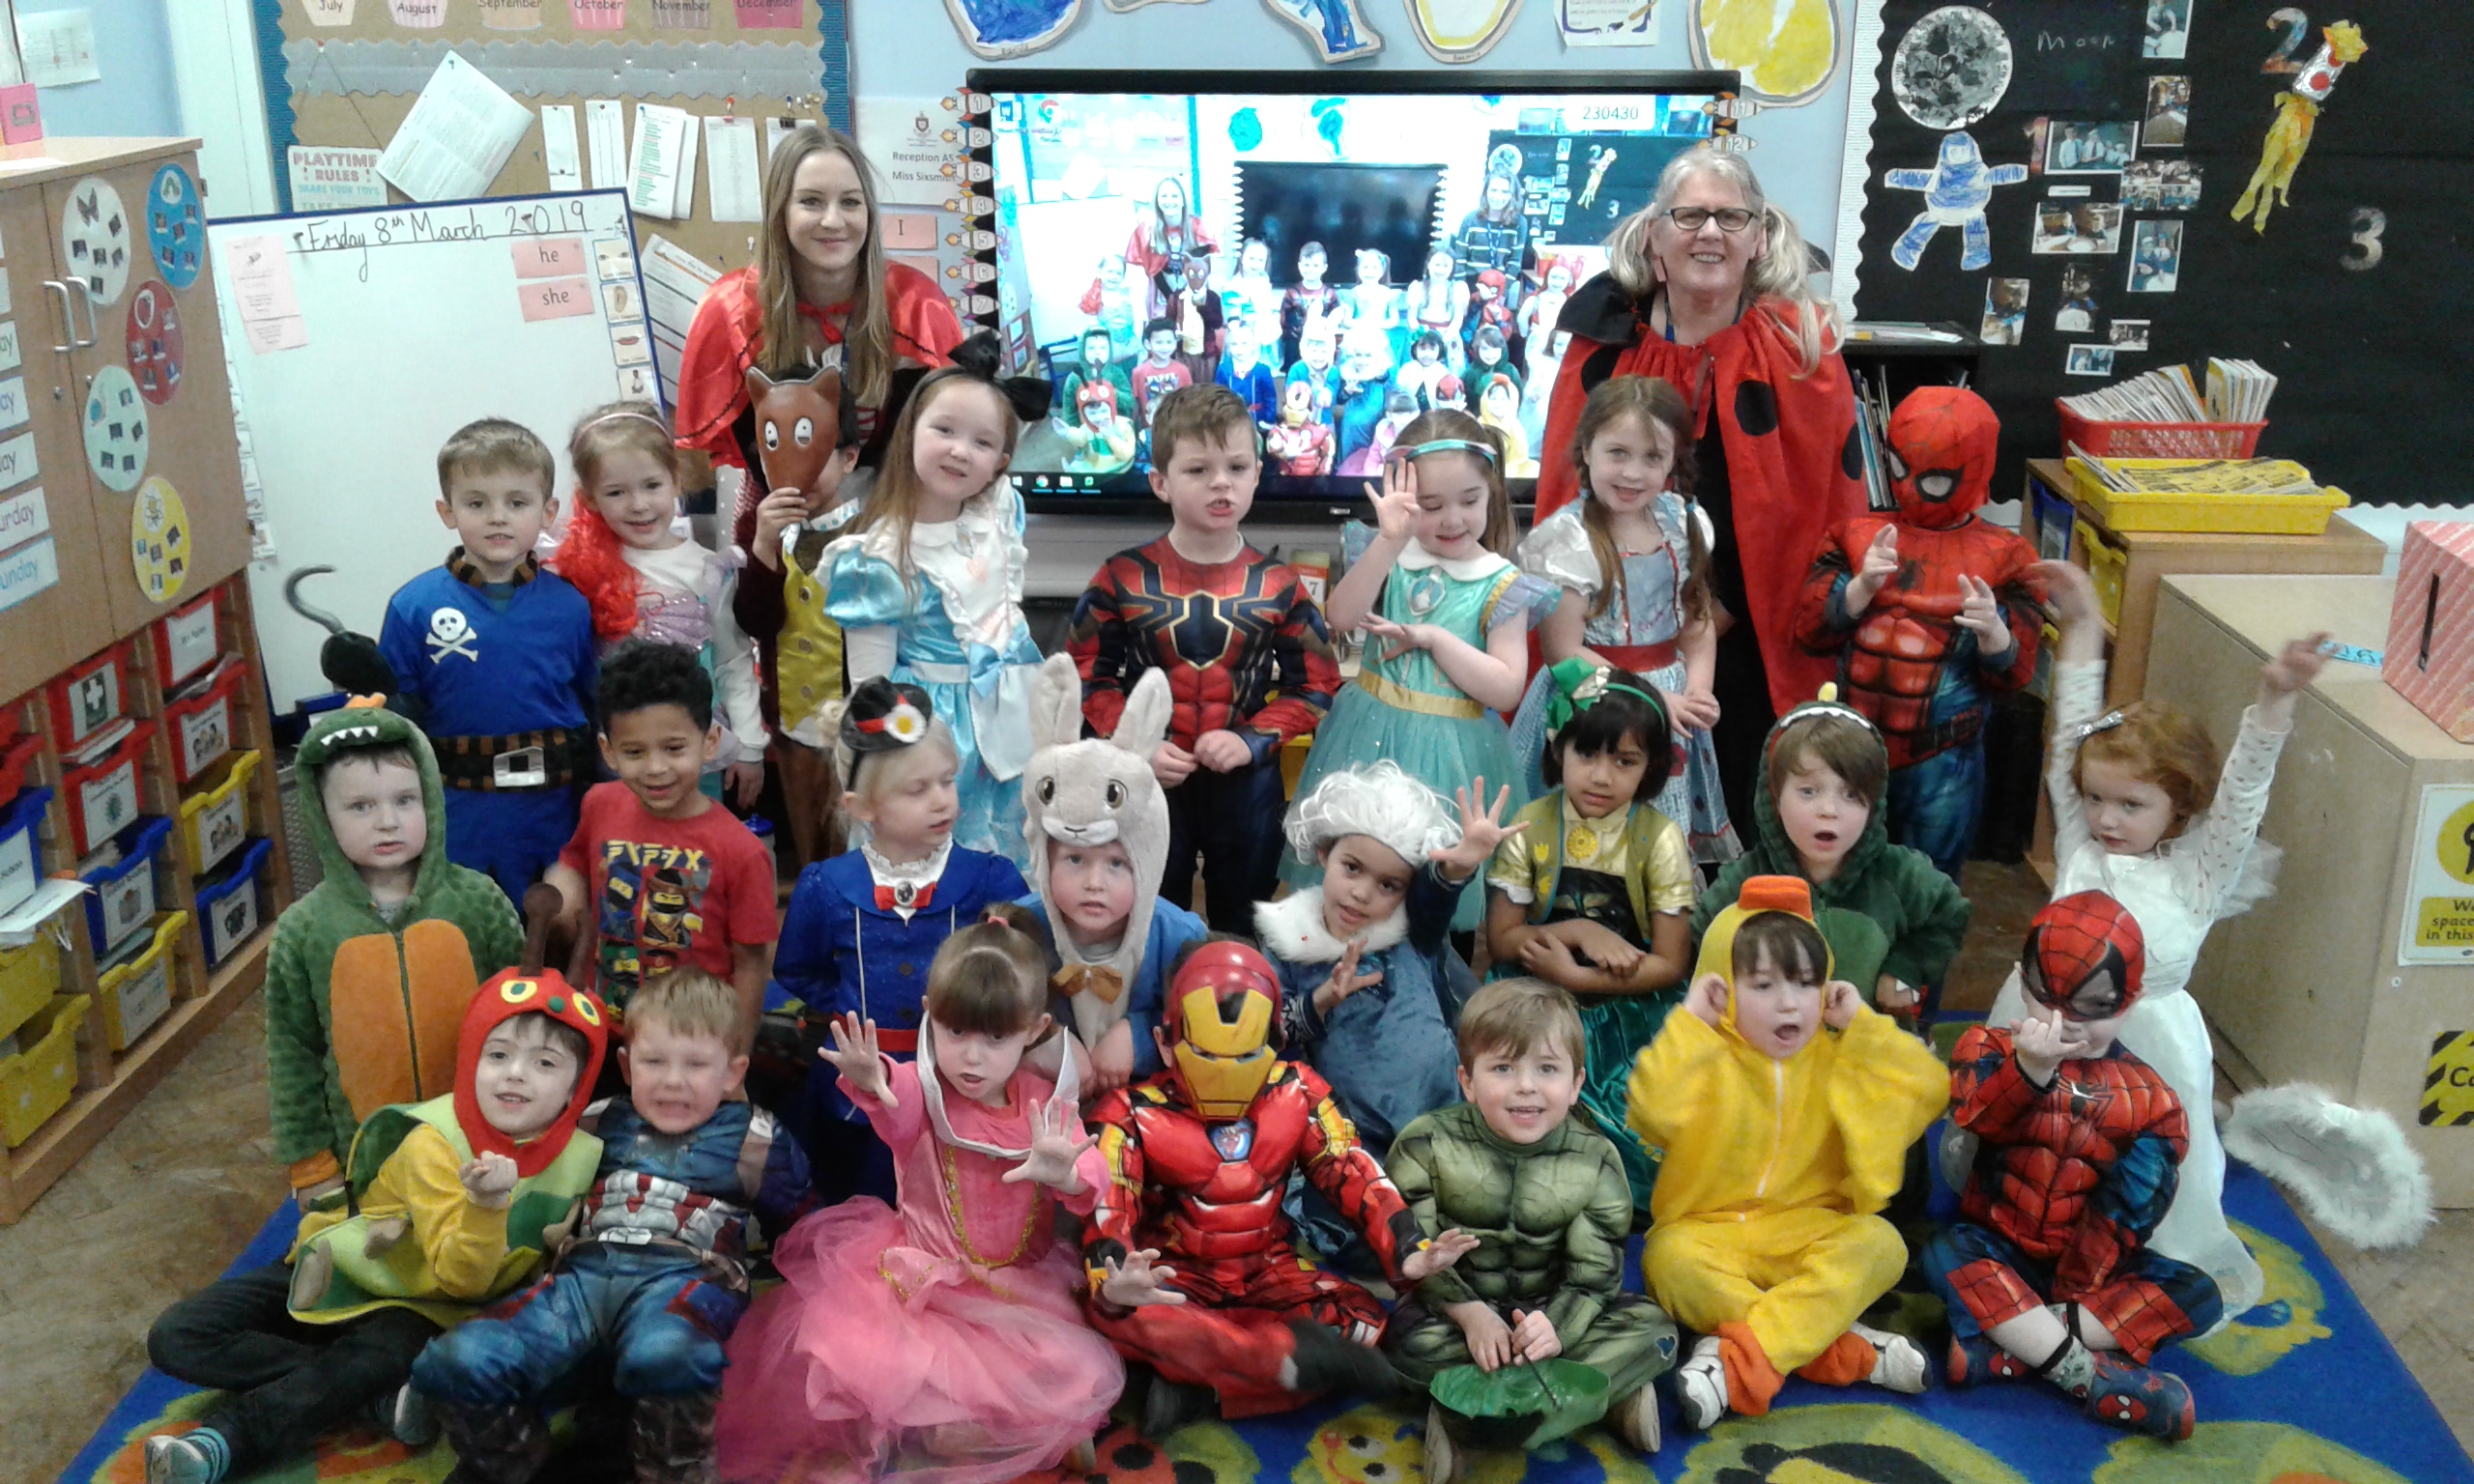 Kidderminster School Celebrates World Book Day